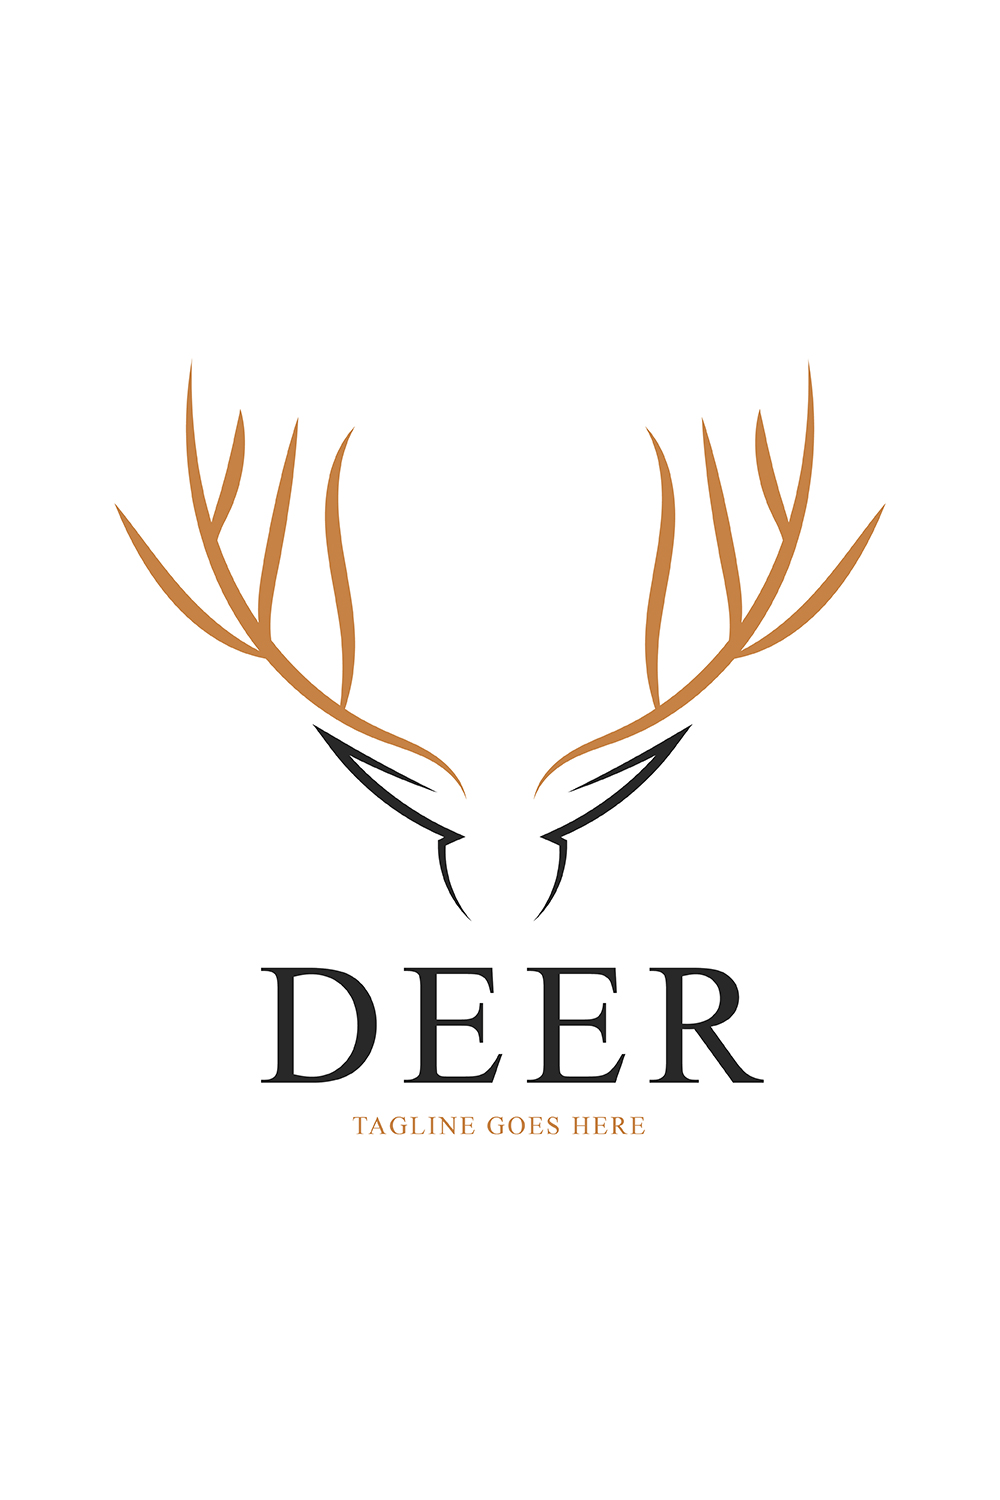 Deer Line Art Logo Design pinterest image.